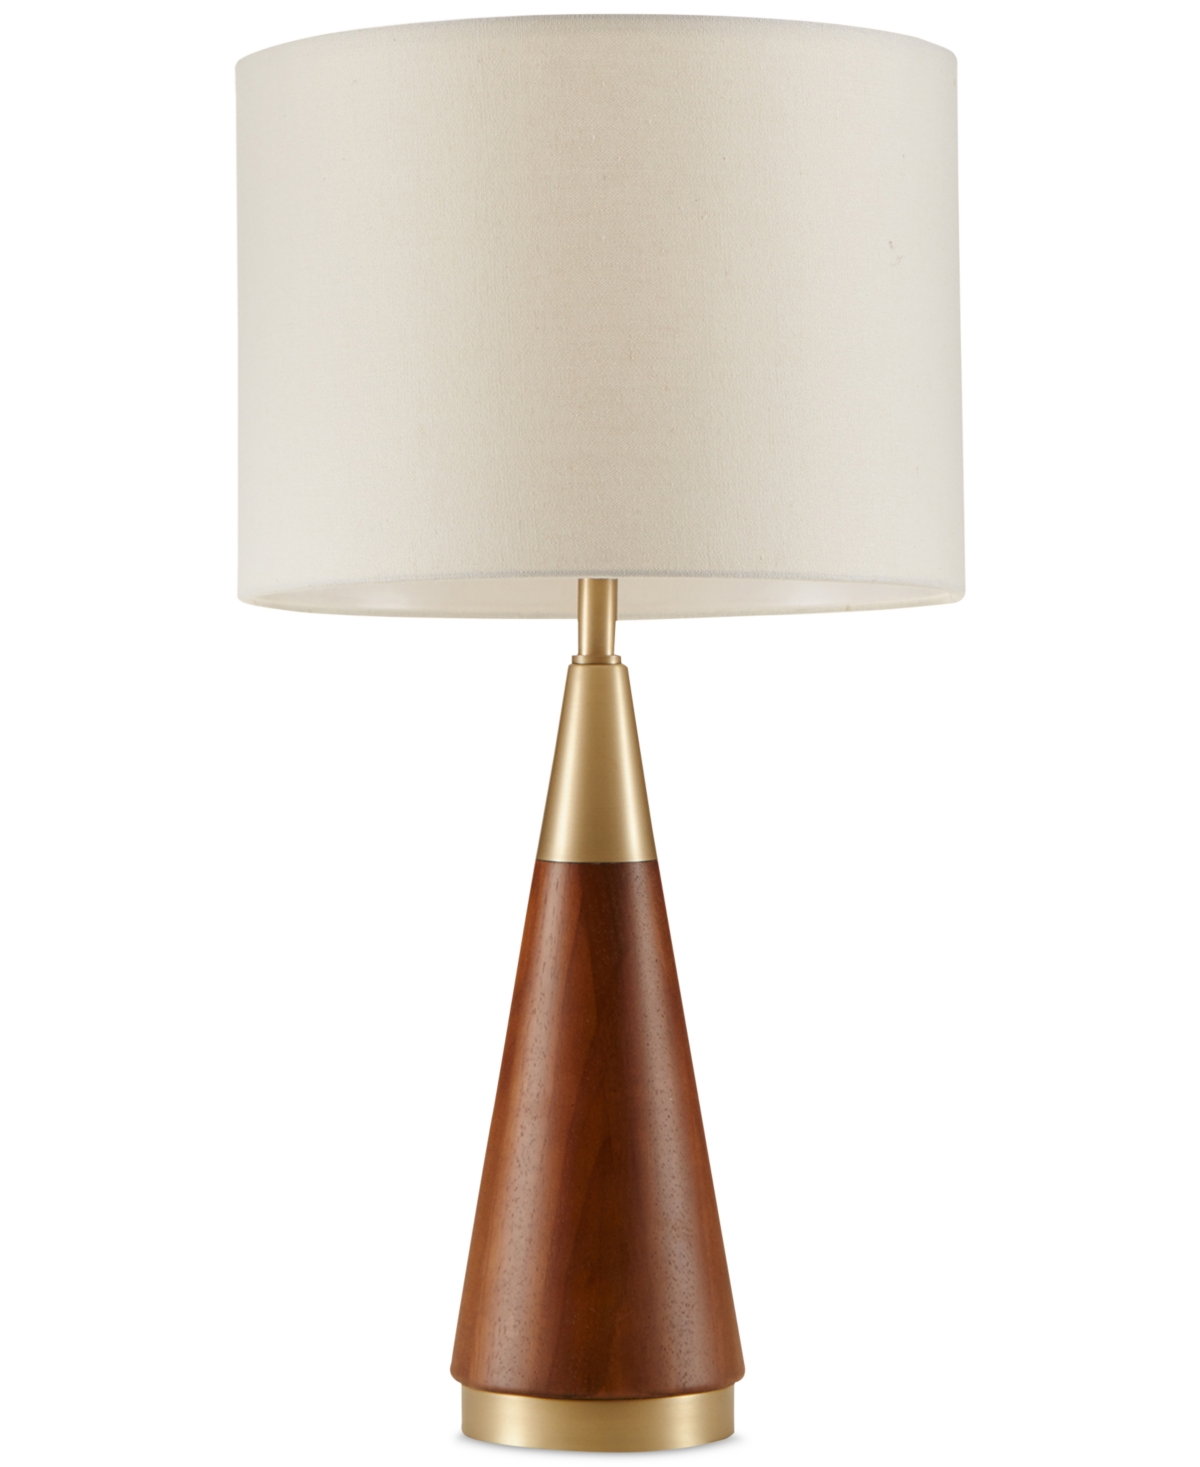 510 Design Ink+ivy Chrislie Wood Table Lamp In Gold,brown